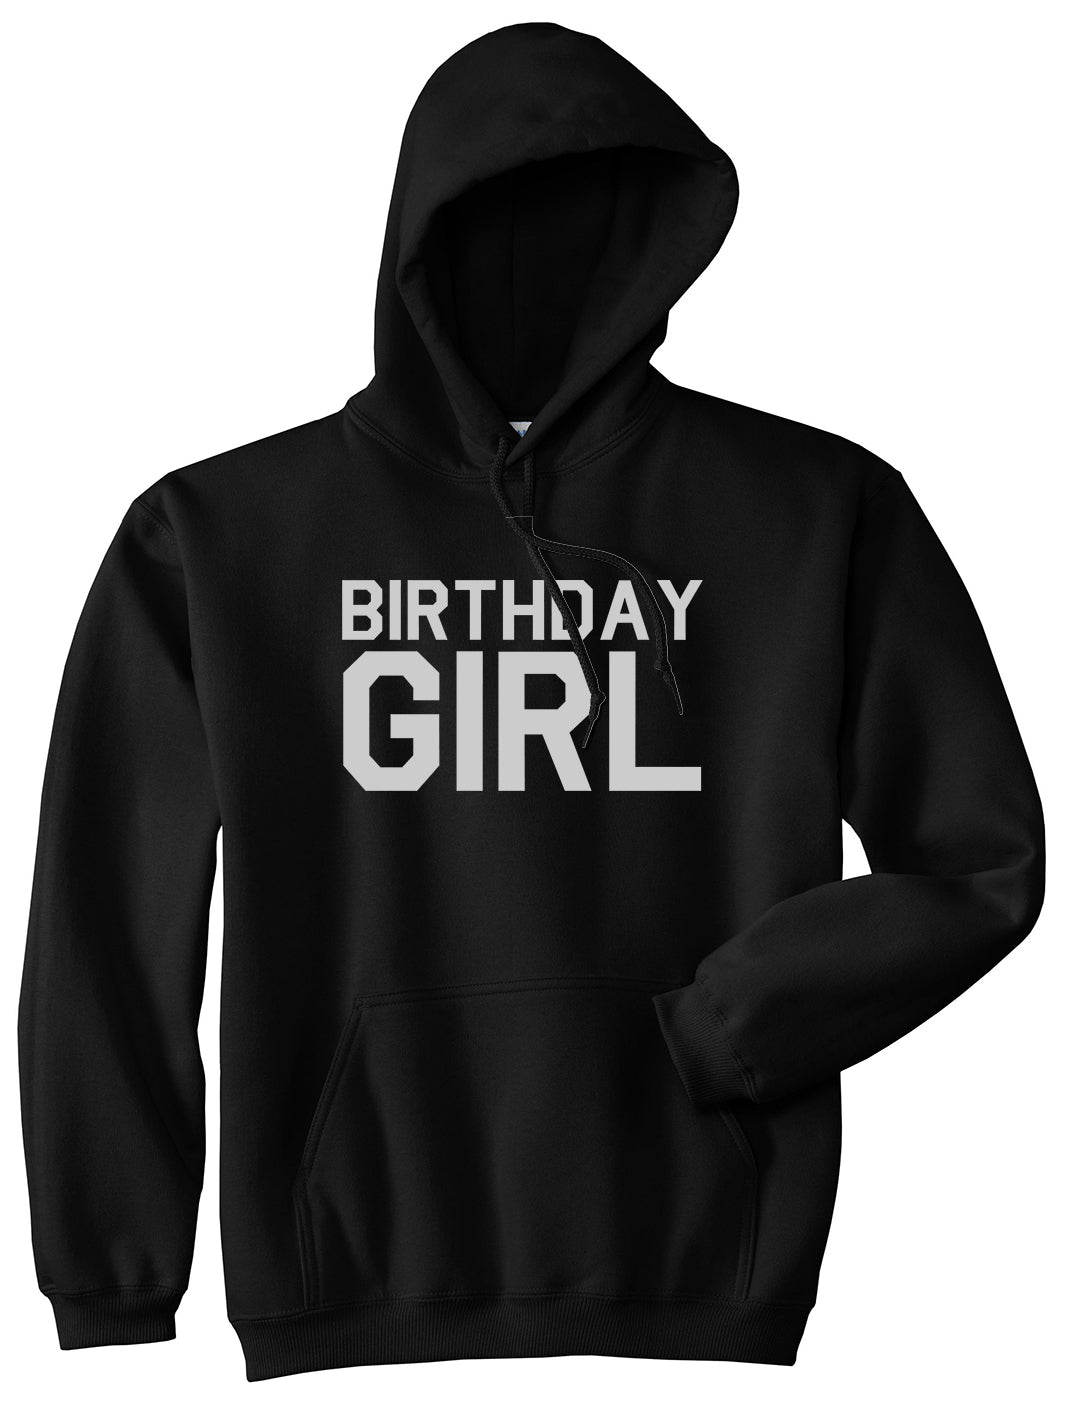 Birthday Girl Black Pullover Hoodie by Kings Of NY